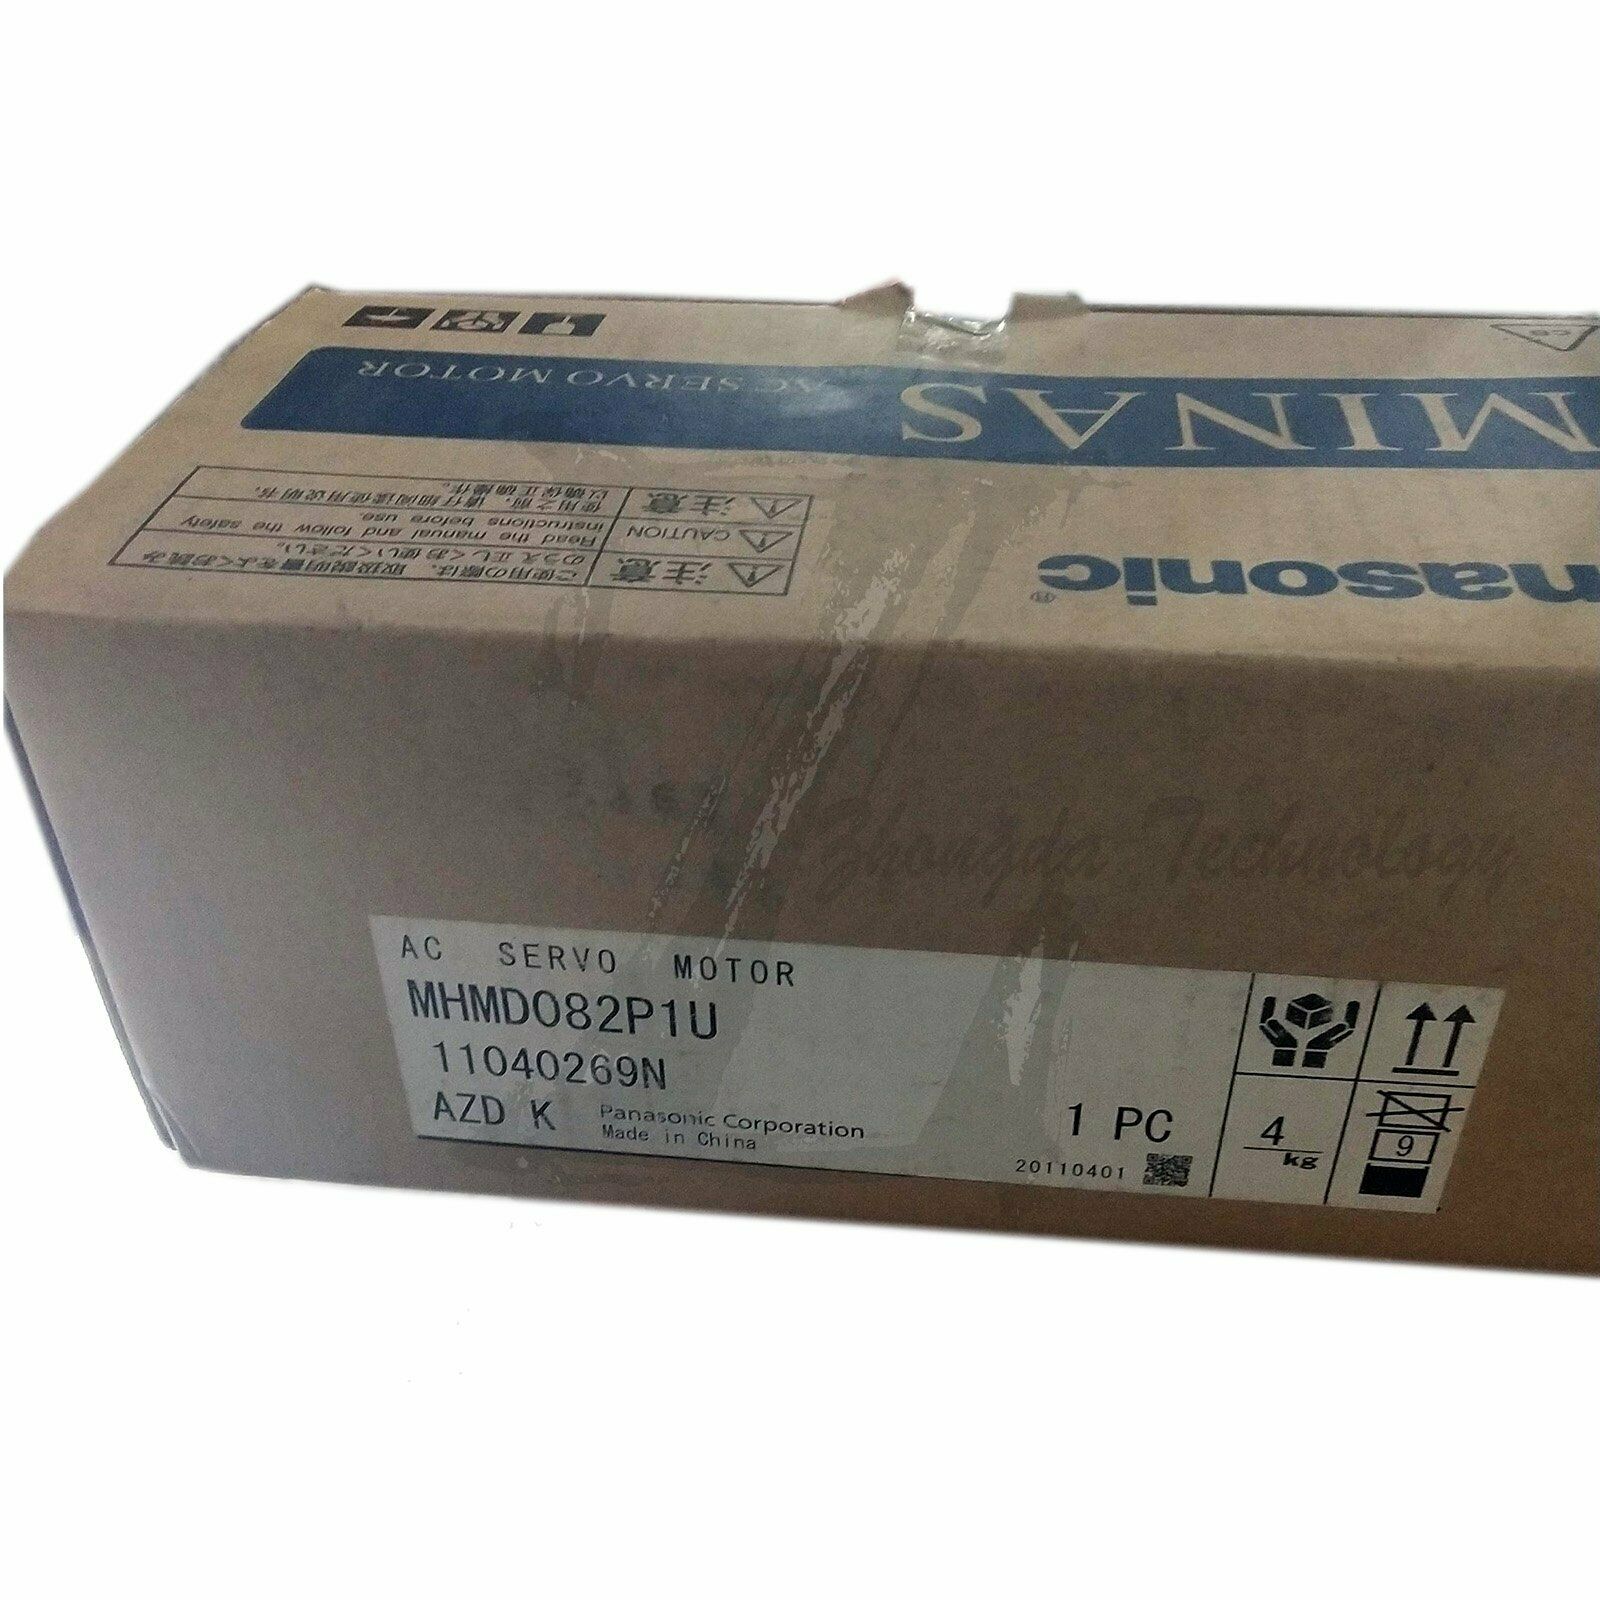 New In Box 1pc Panasonic MHMD082P1U servo motor